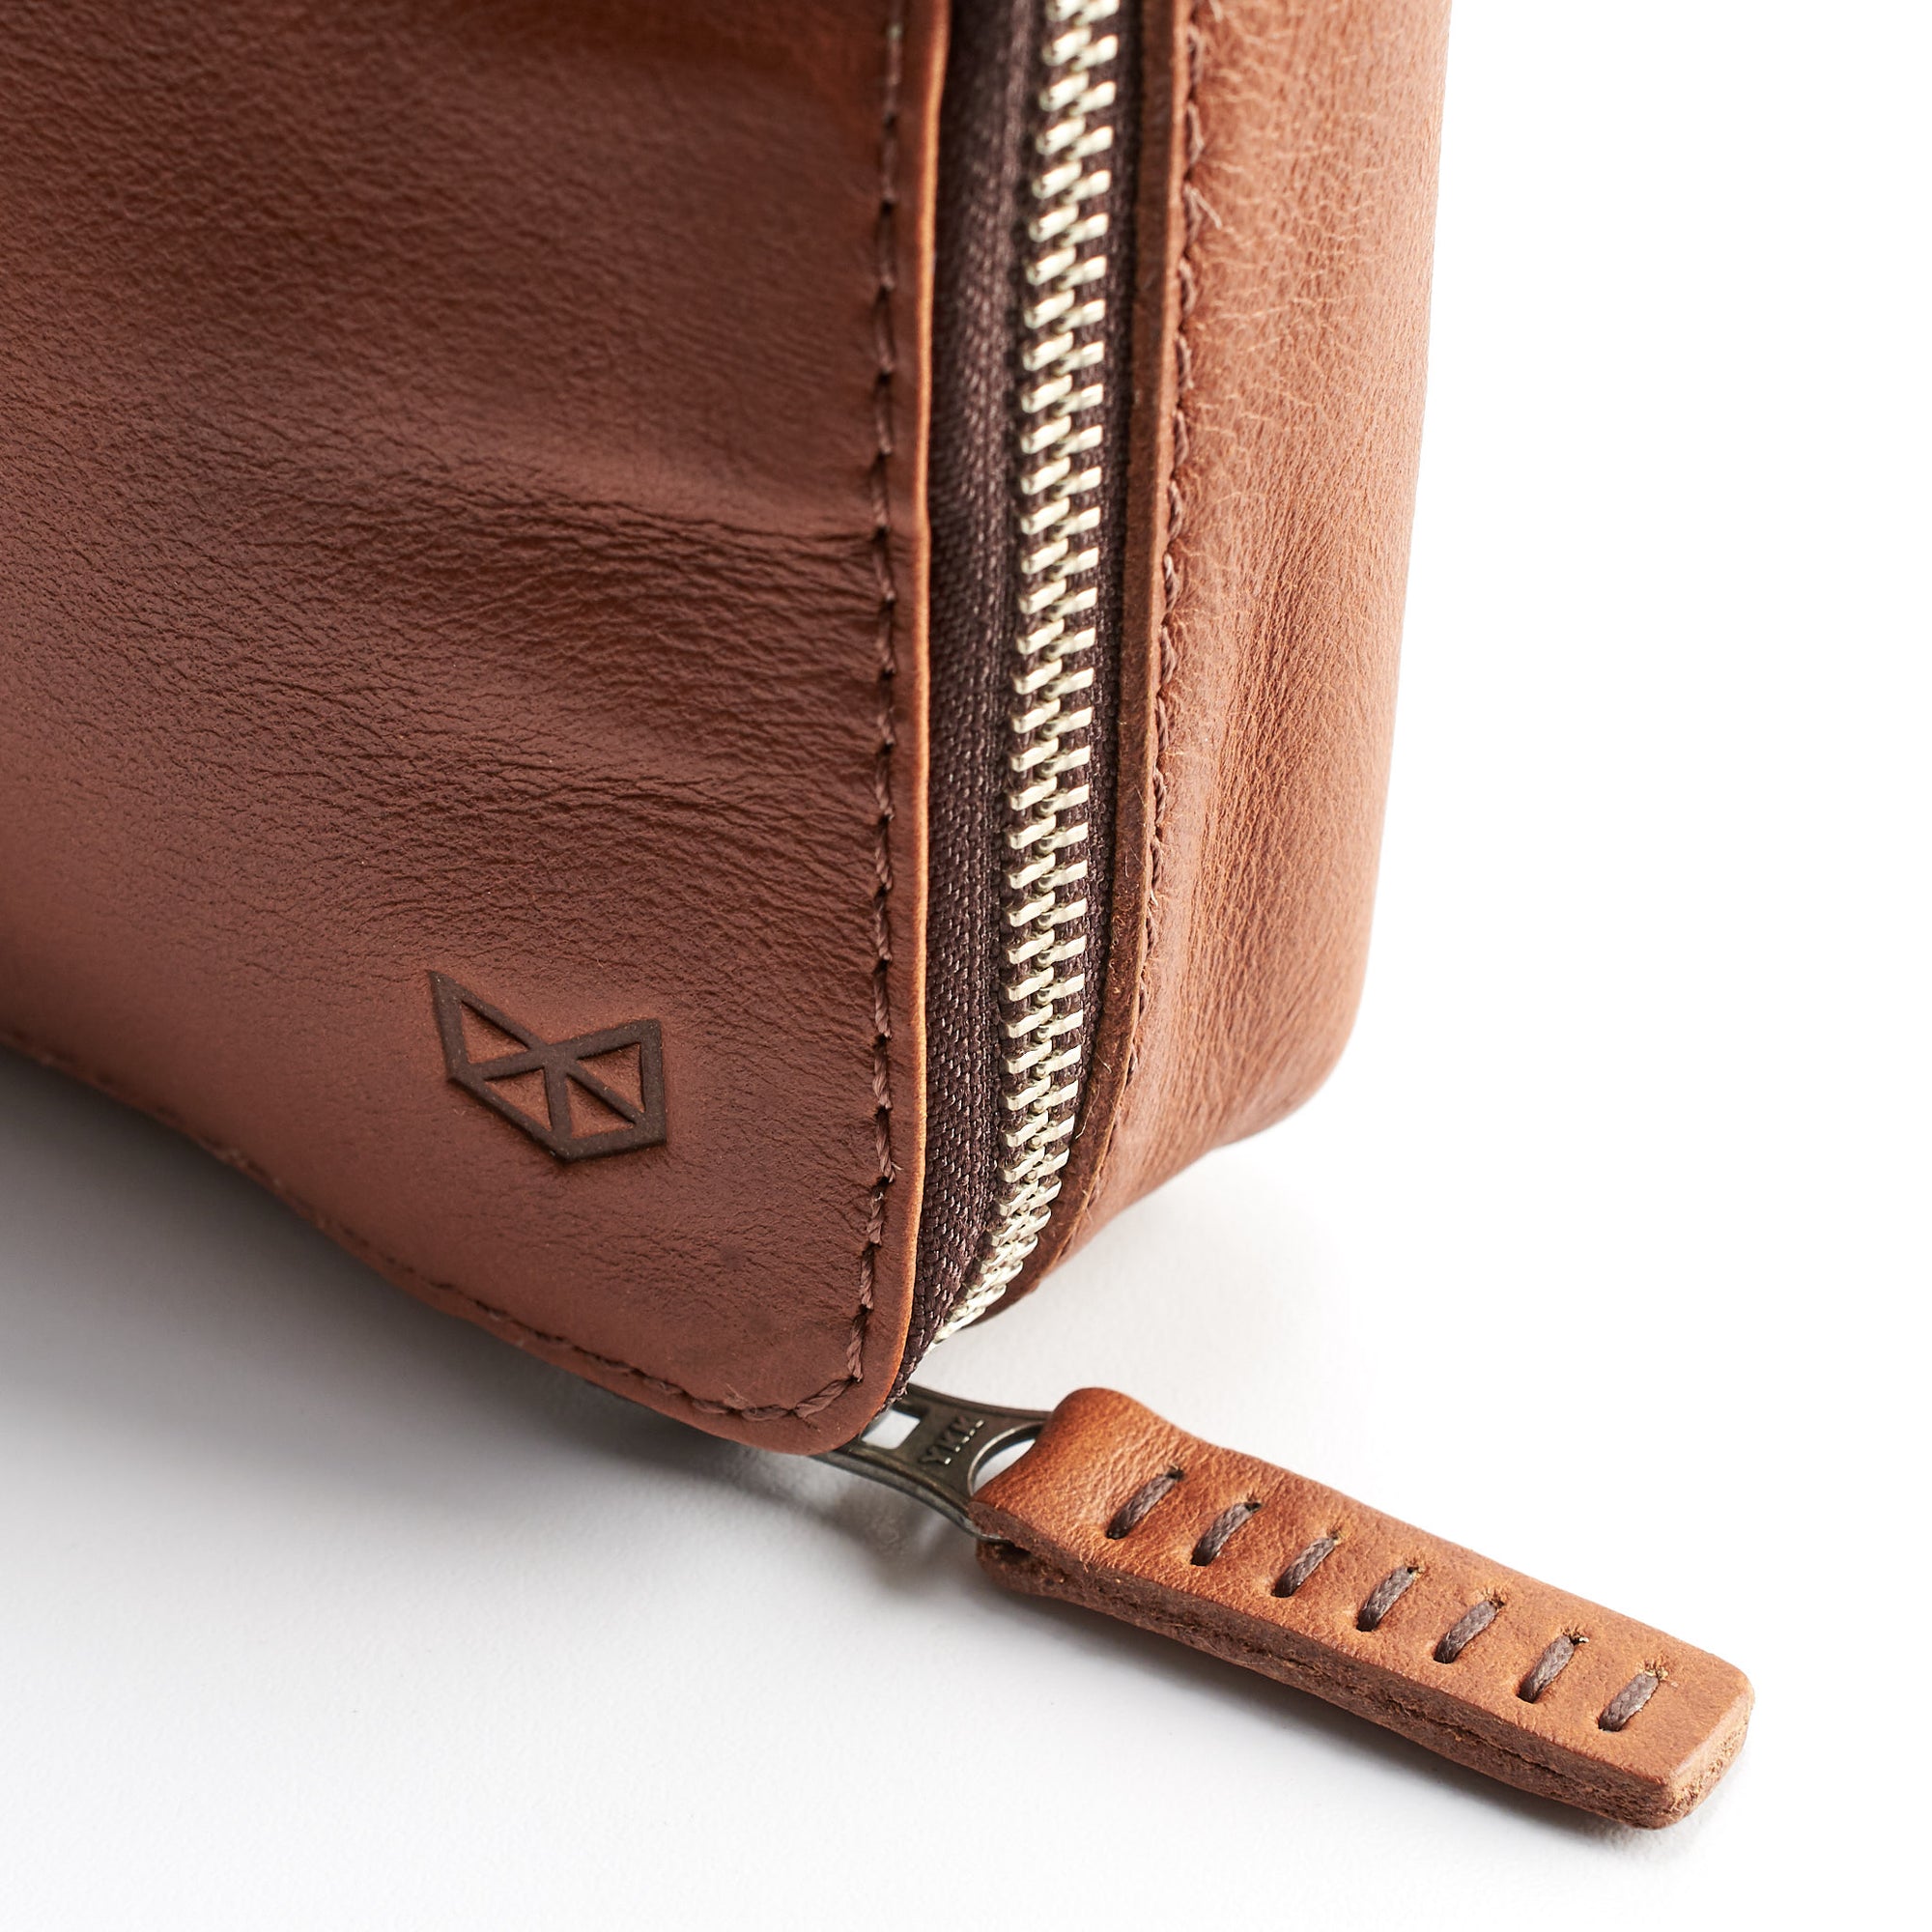 YKK metallic zippers. Tan tech accessory organizer. Leather gadget bag by Capra